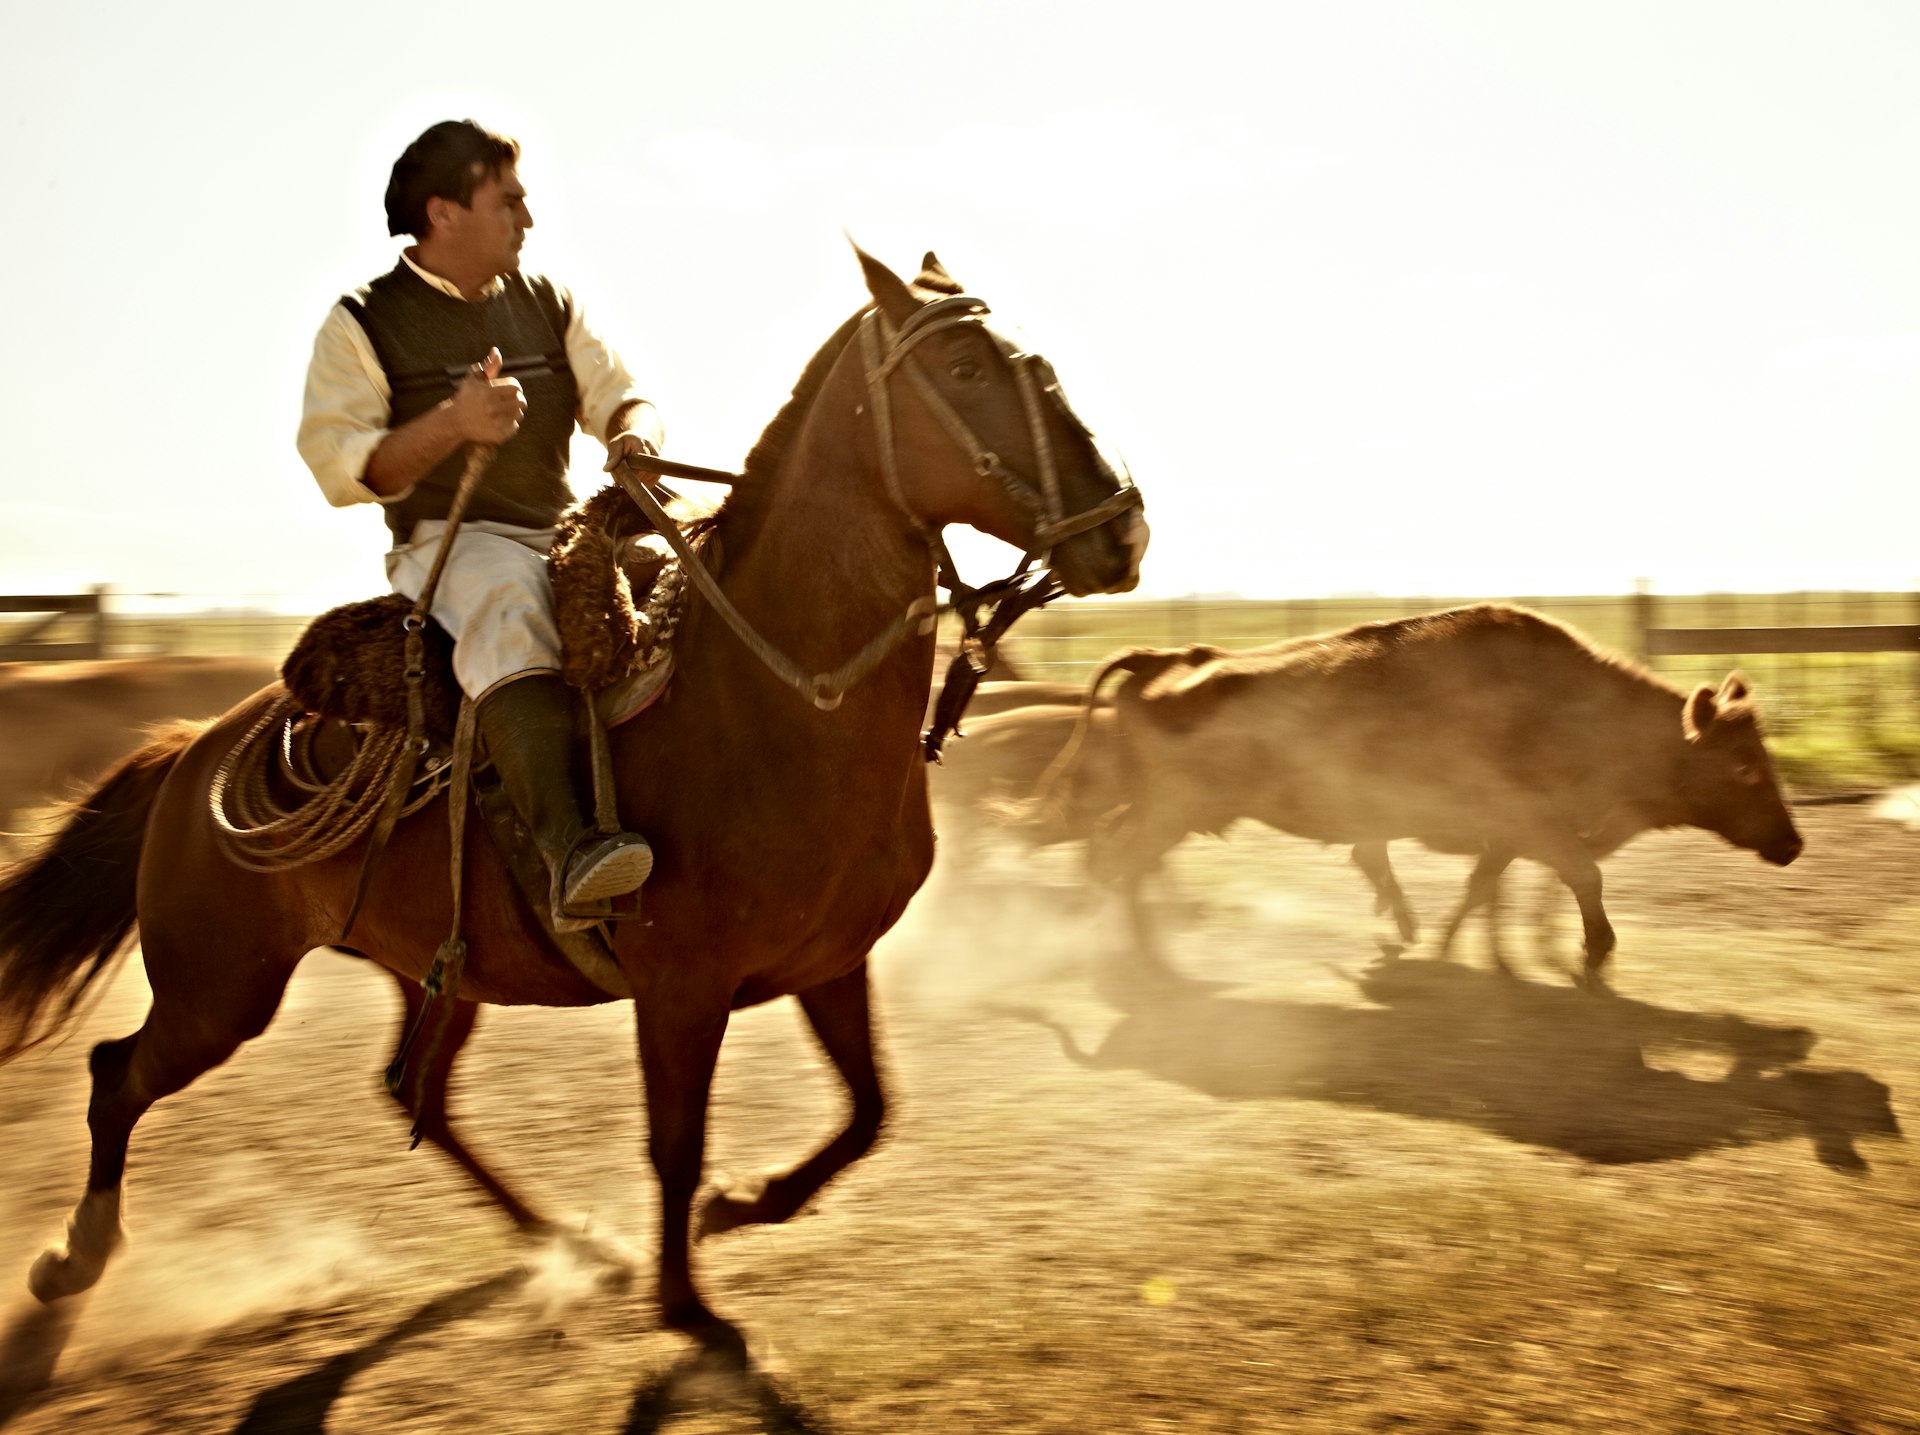 Gaucho horseman herding cattle in Argentina